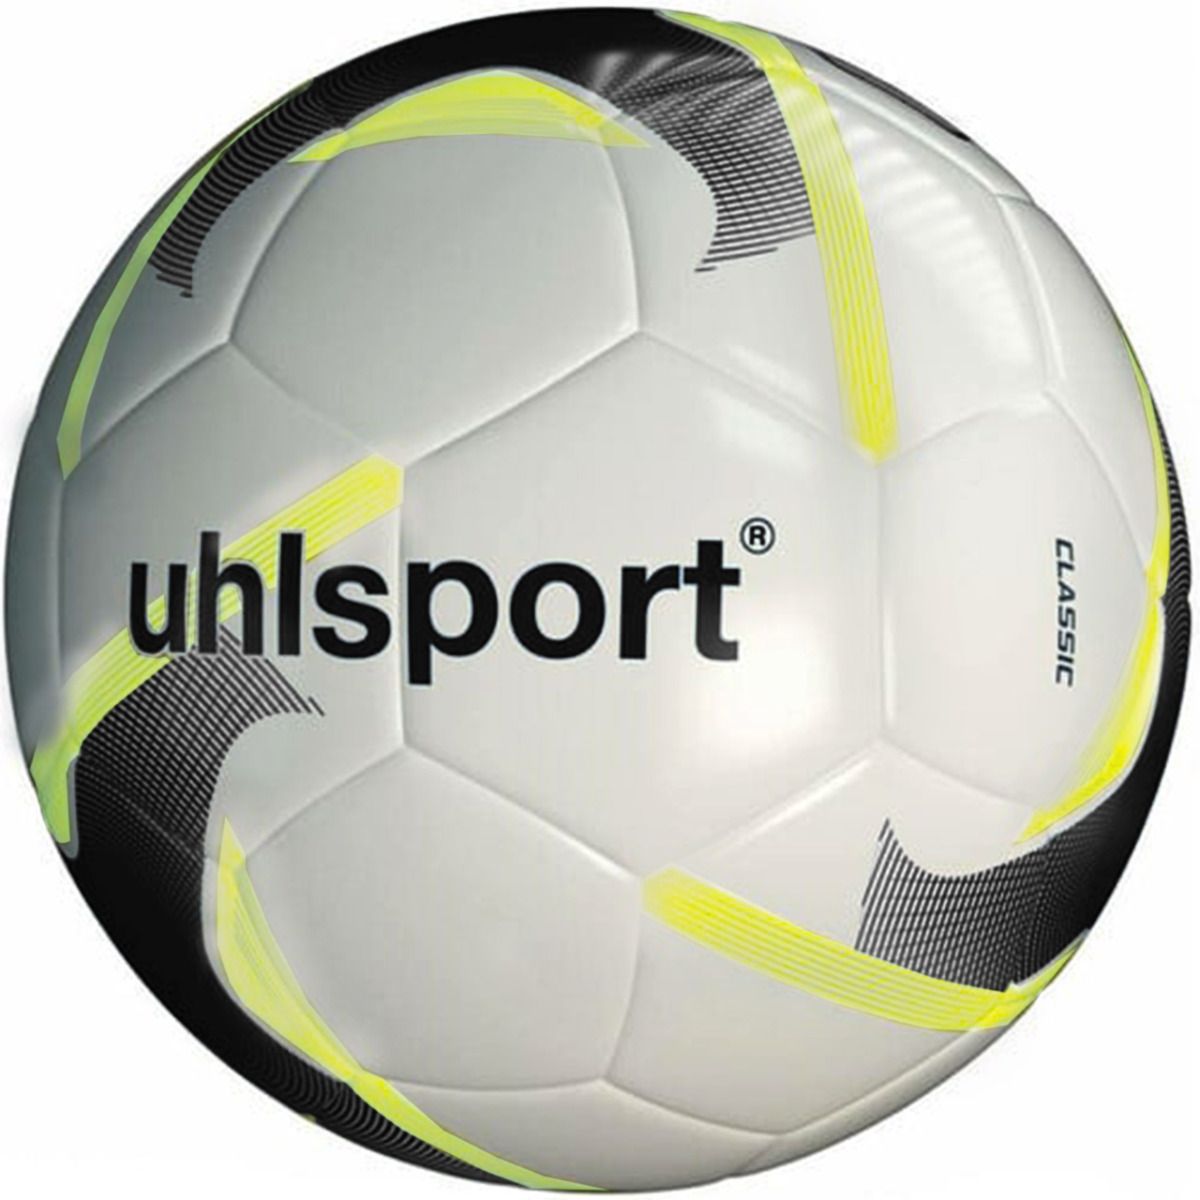 UHL Sport Fußball Classic 100171401